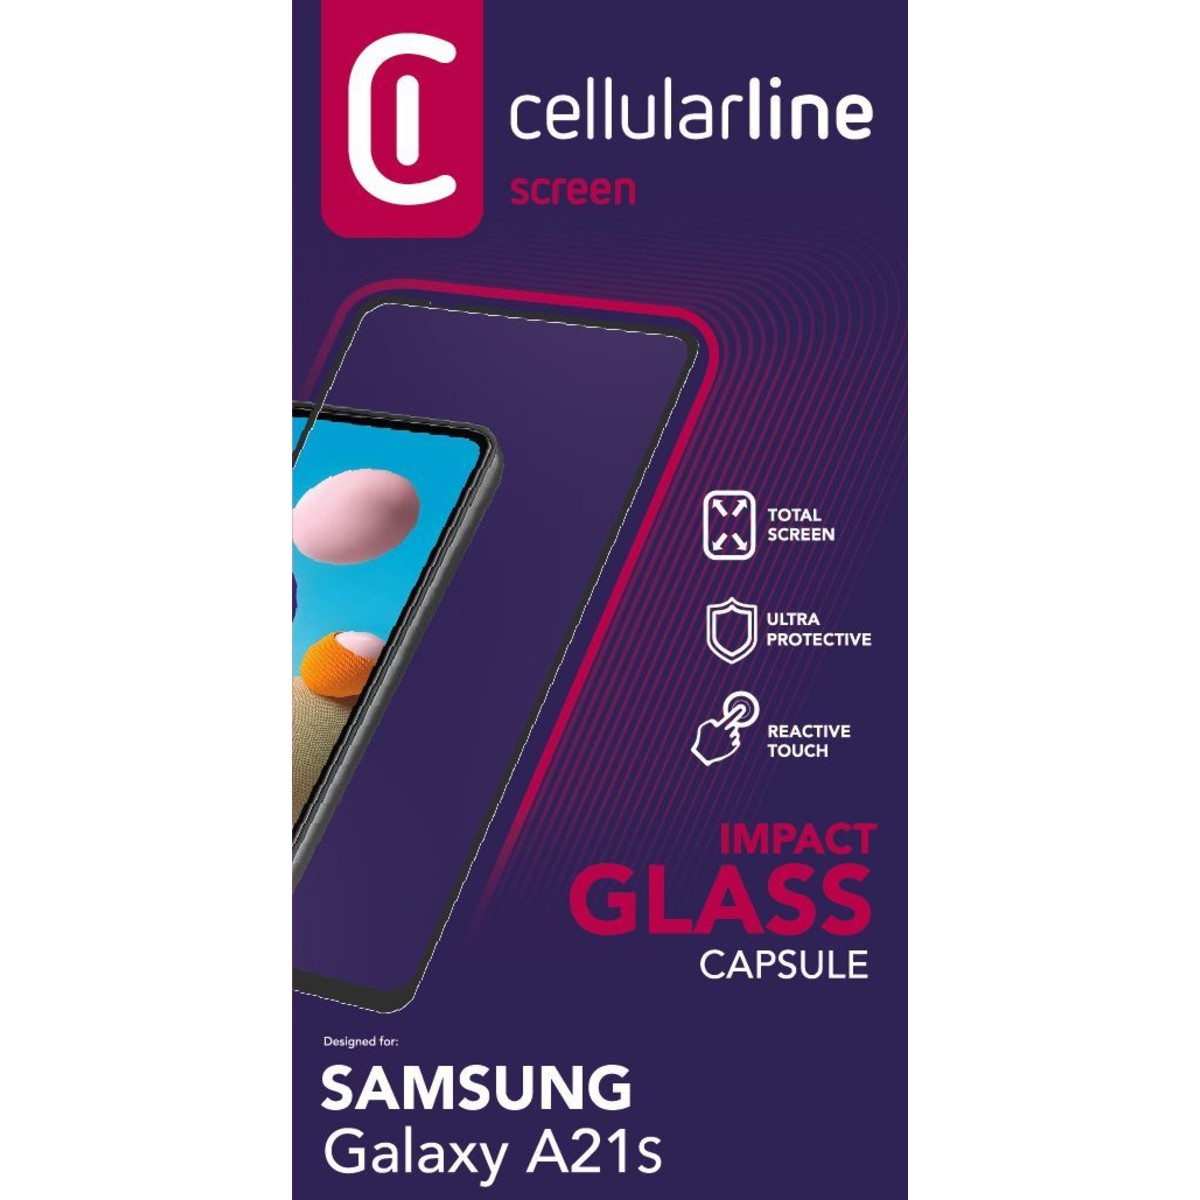 Schutzglas IMPACT GLASS CAPSULE für Samsung Galaxy A21s